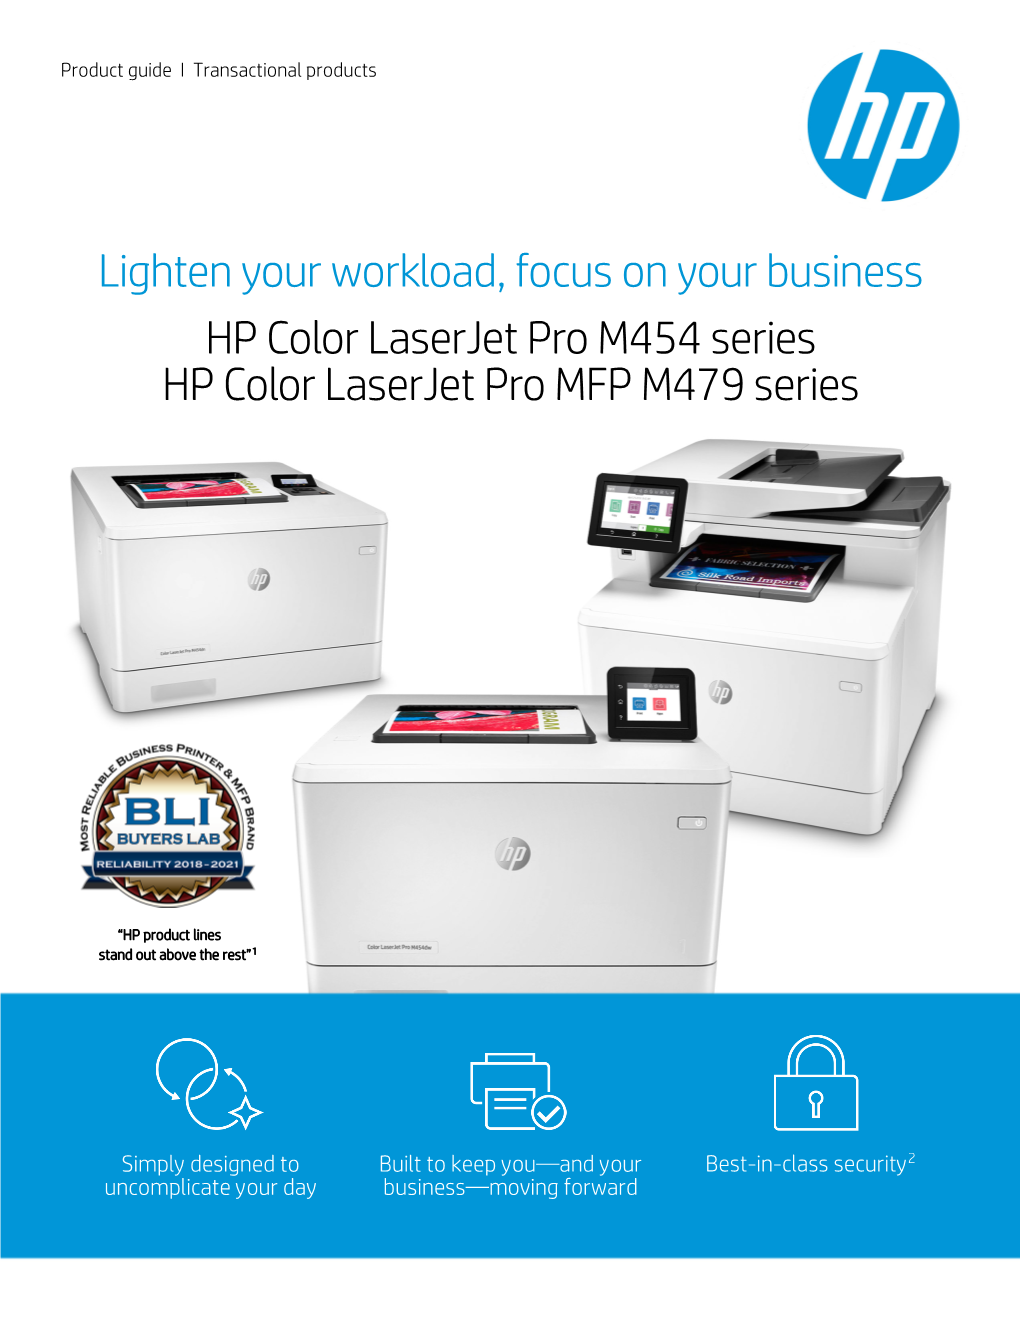 HP Color Laserjet Pro M454 Series HP Color Laserjet Pro MFP M479 Series